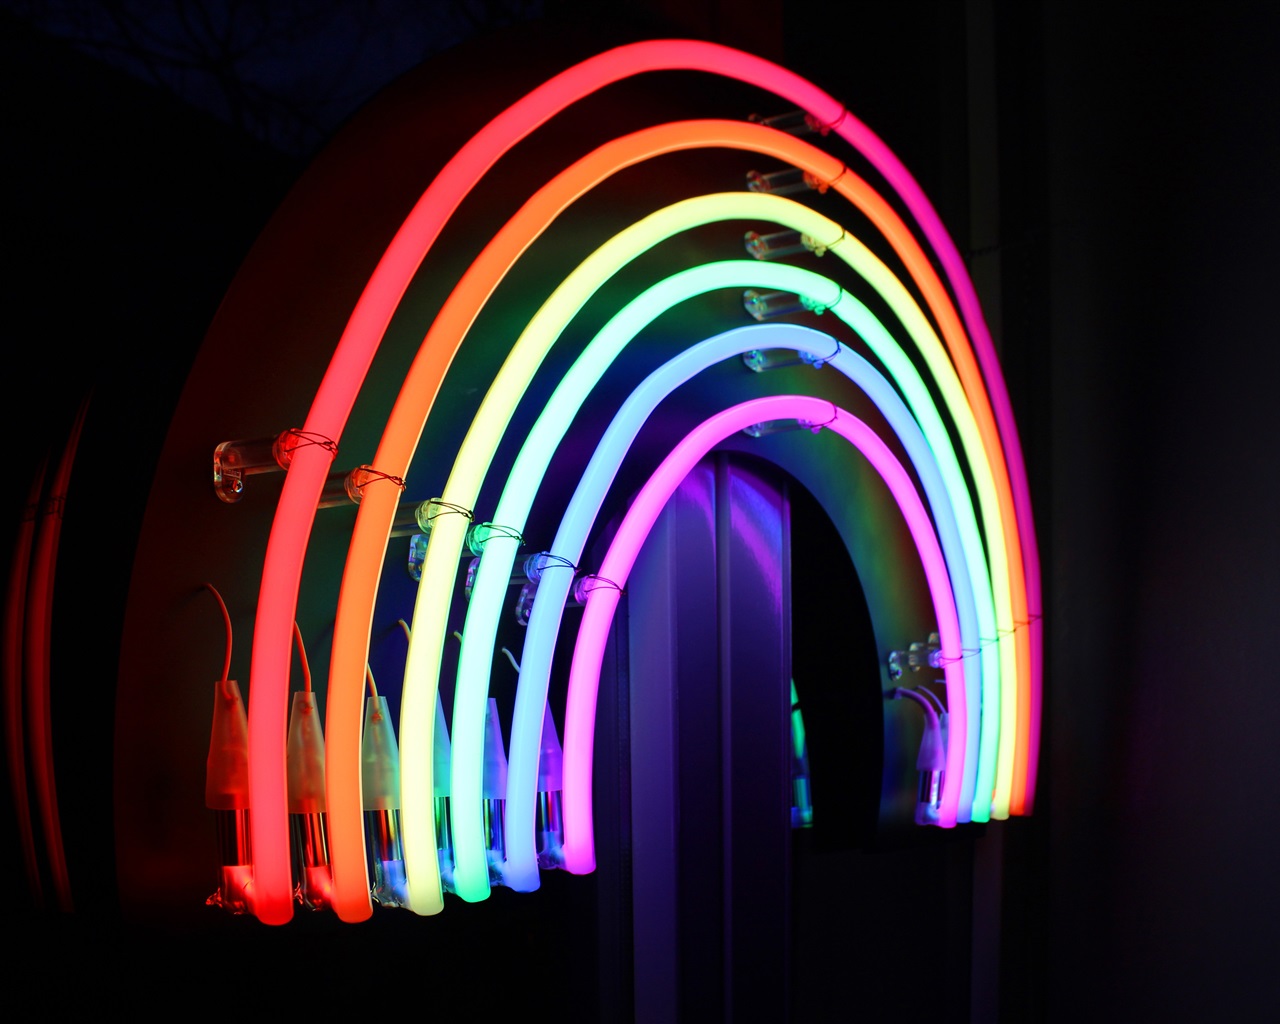 Wallpaper Neon lights, rainbow colors 3840x2160 UHD 4K Picture, Image